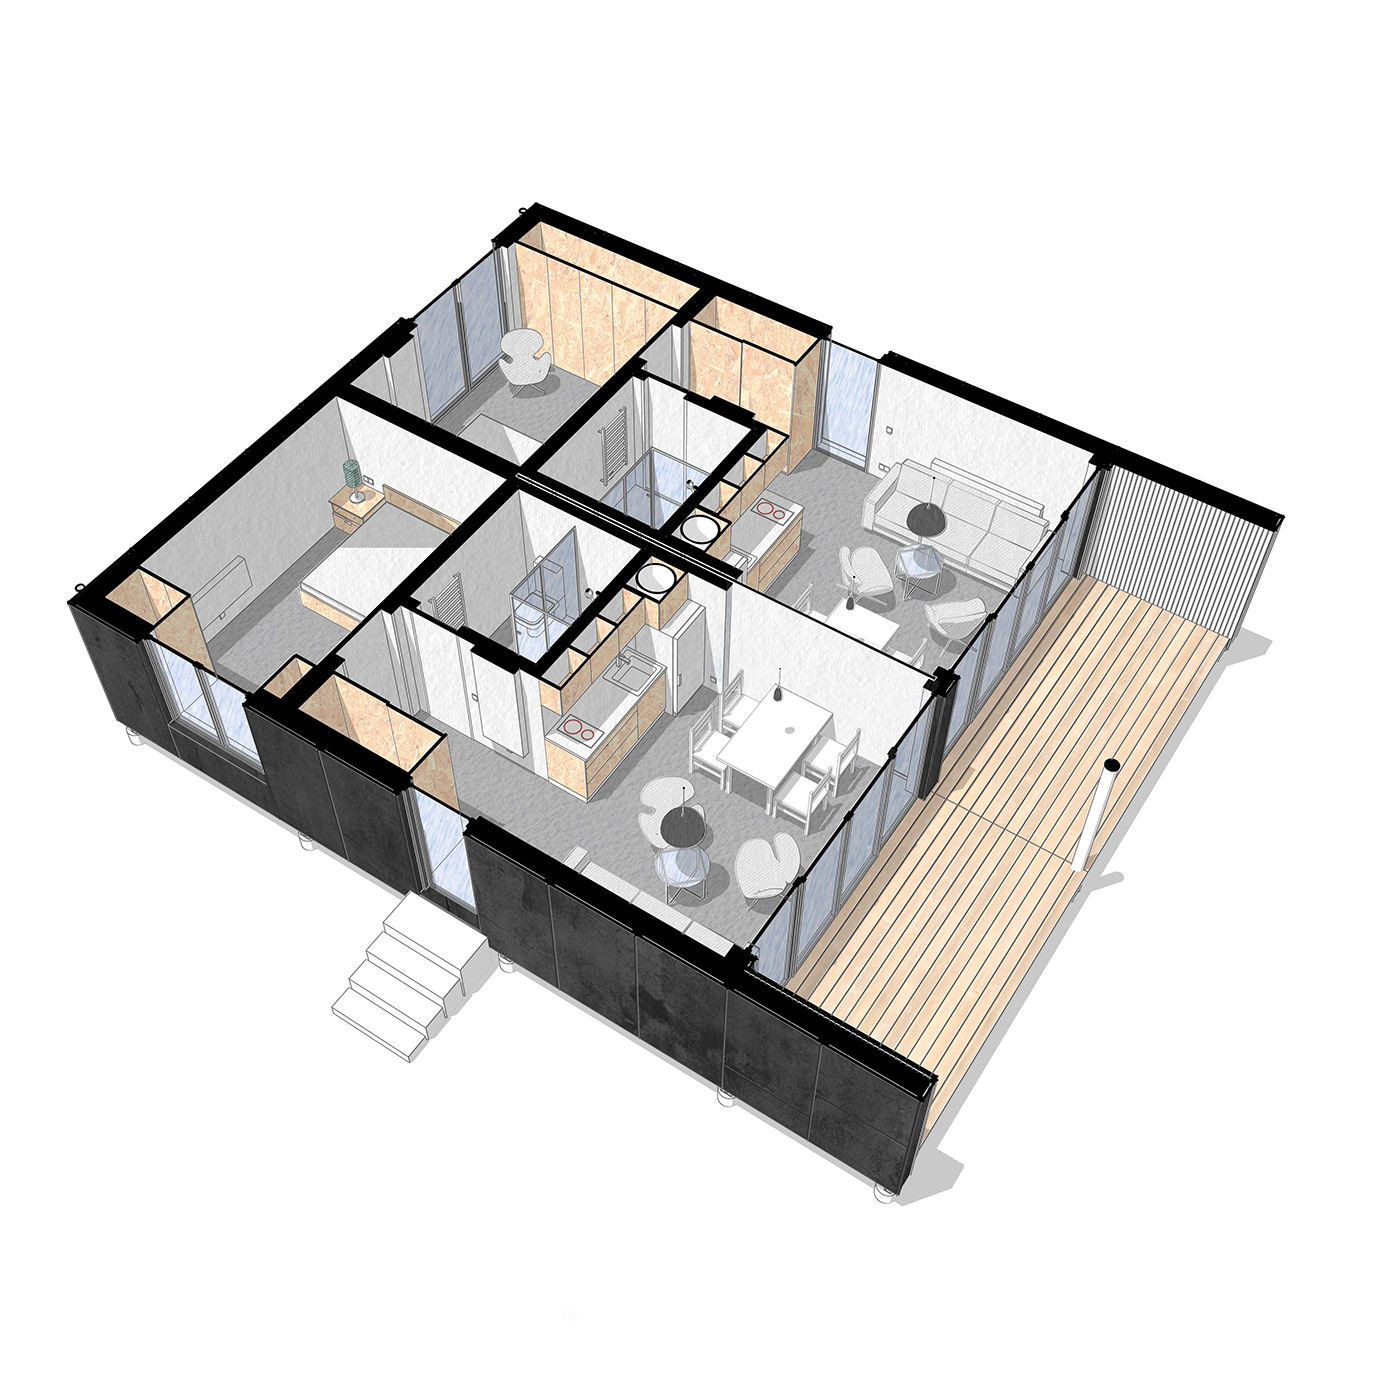 hotel Nature retreat cabin Prefab prefabricated lifestyle airbnb Booking modular